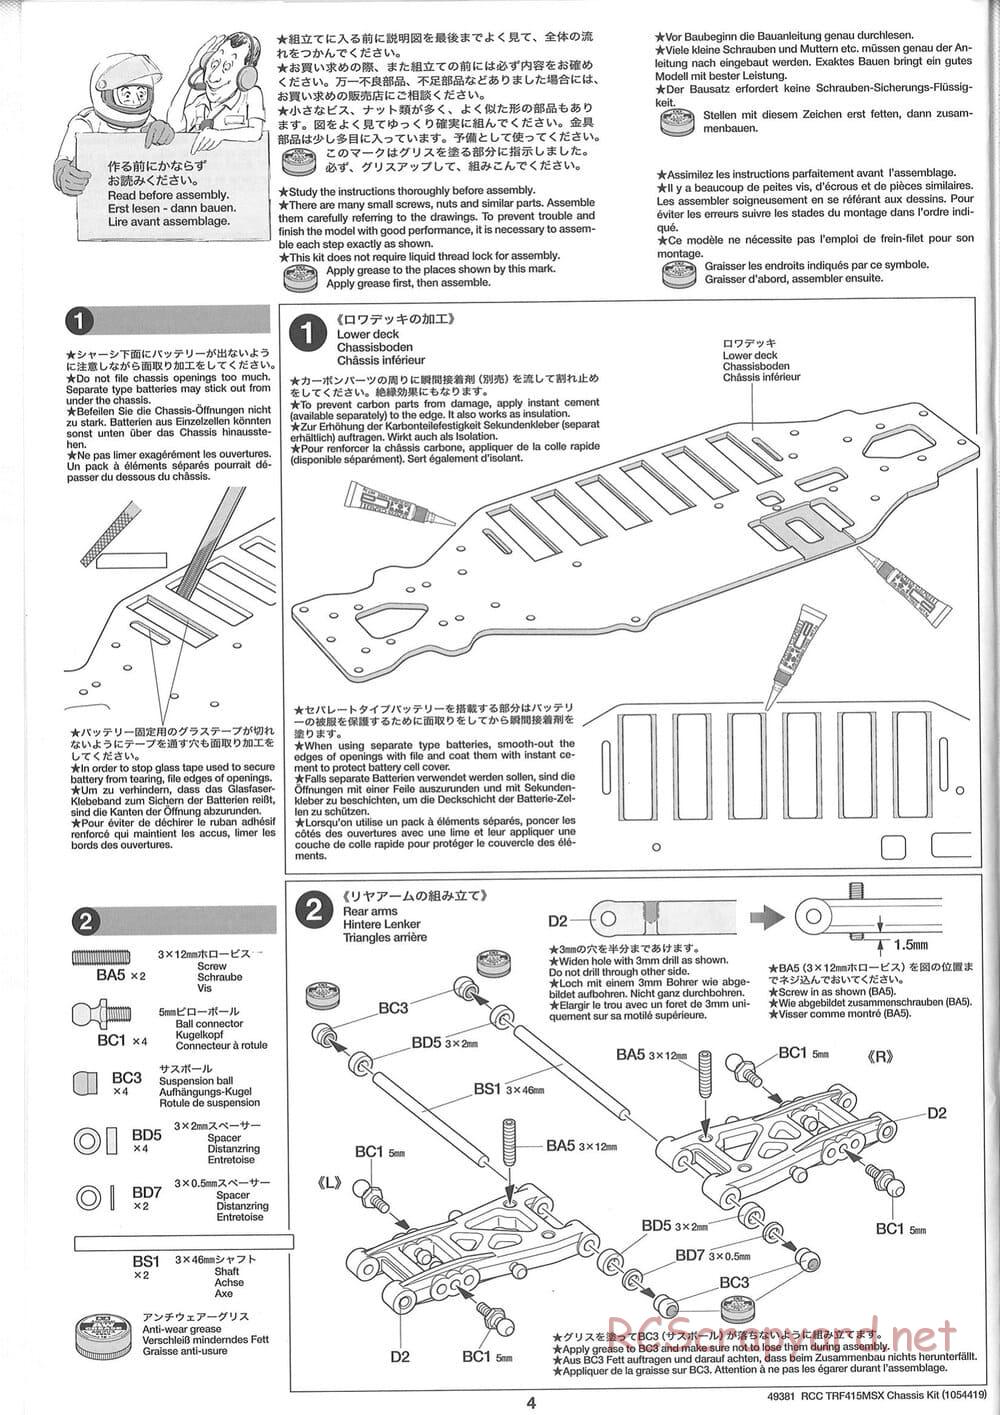 Tamiya - TRF415-MSX Chassis - Manual - Page 4